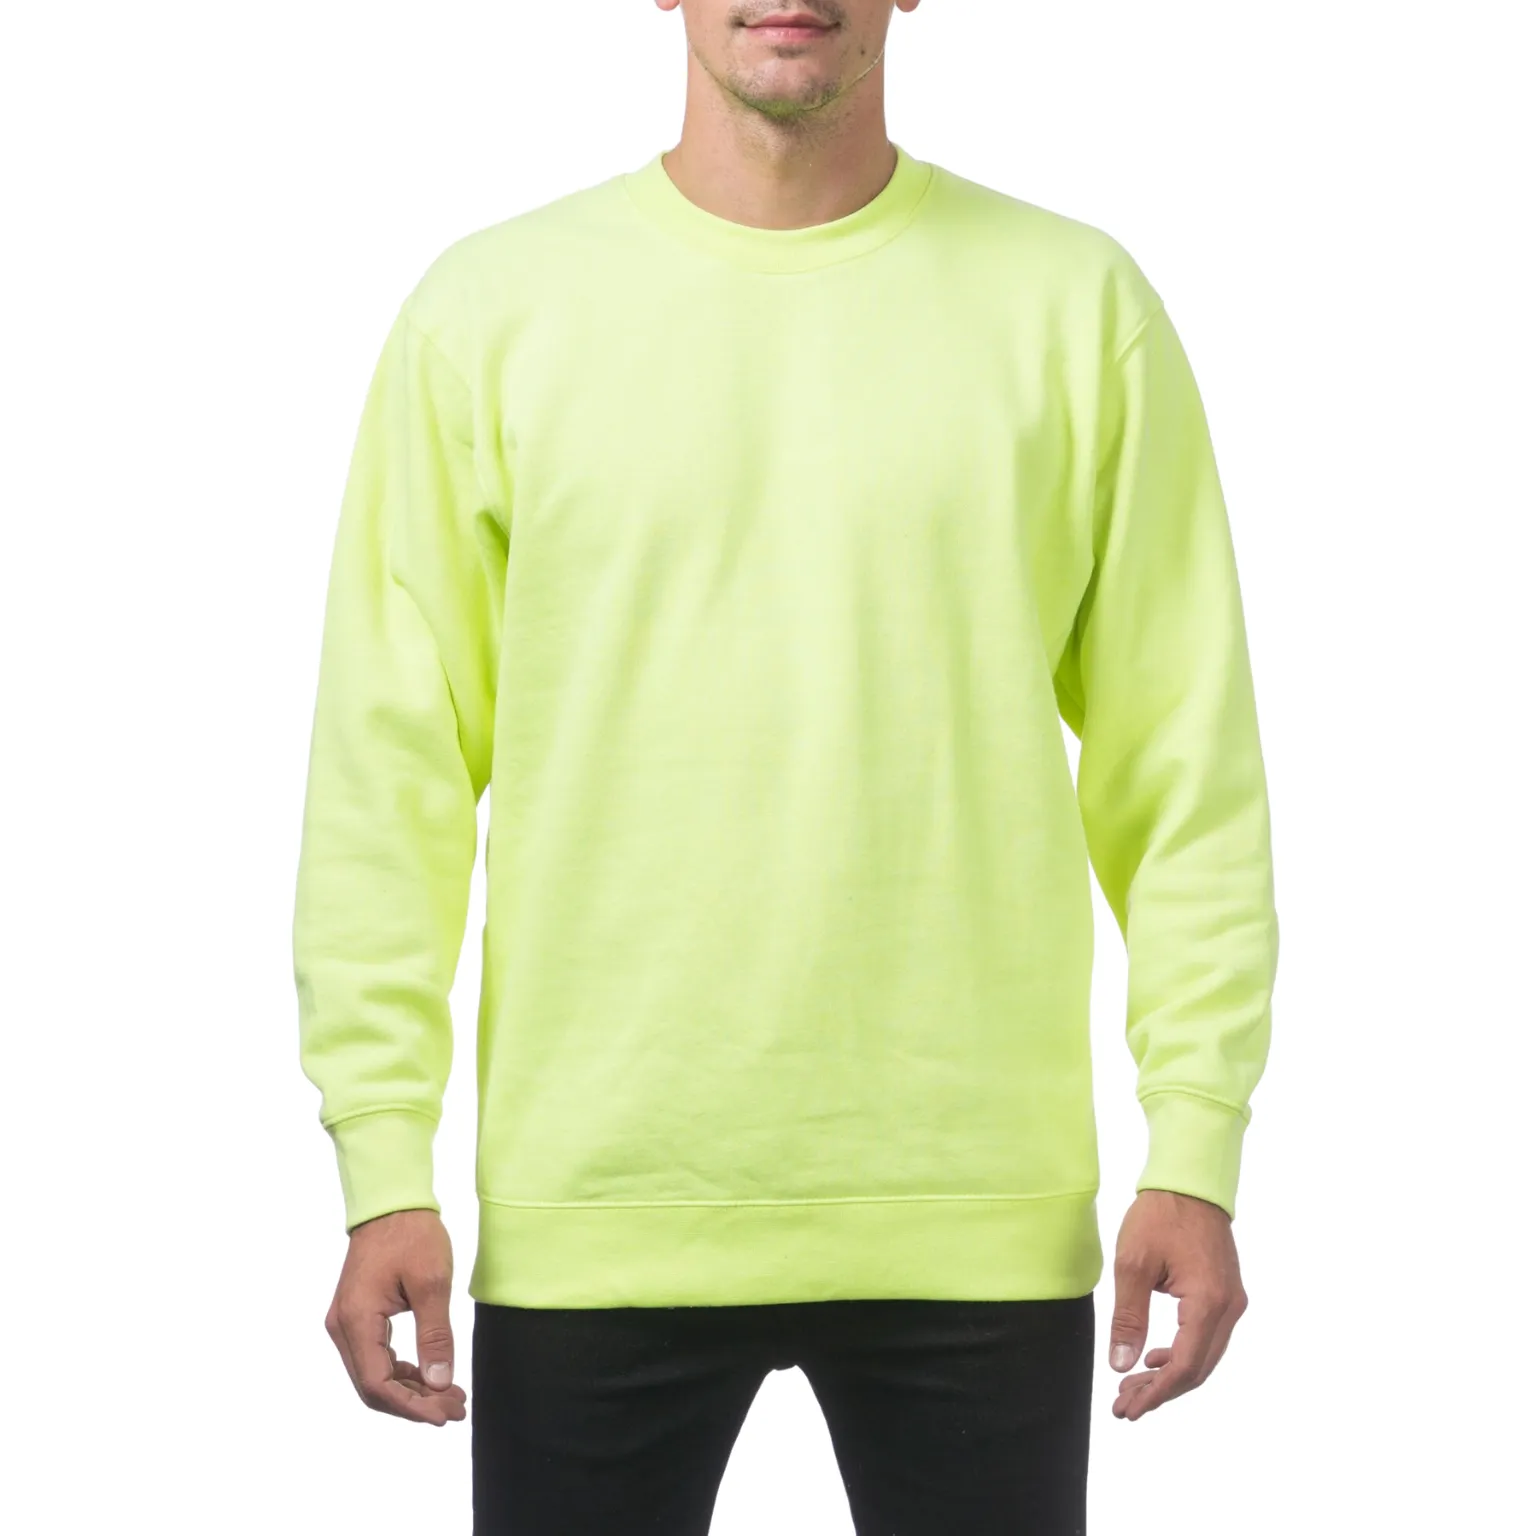 Fleece Sweatshirts manufacturing with trendy design